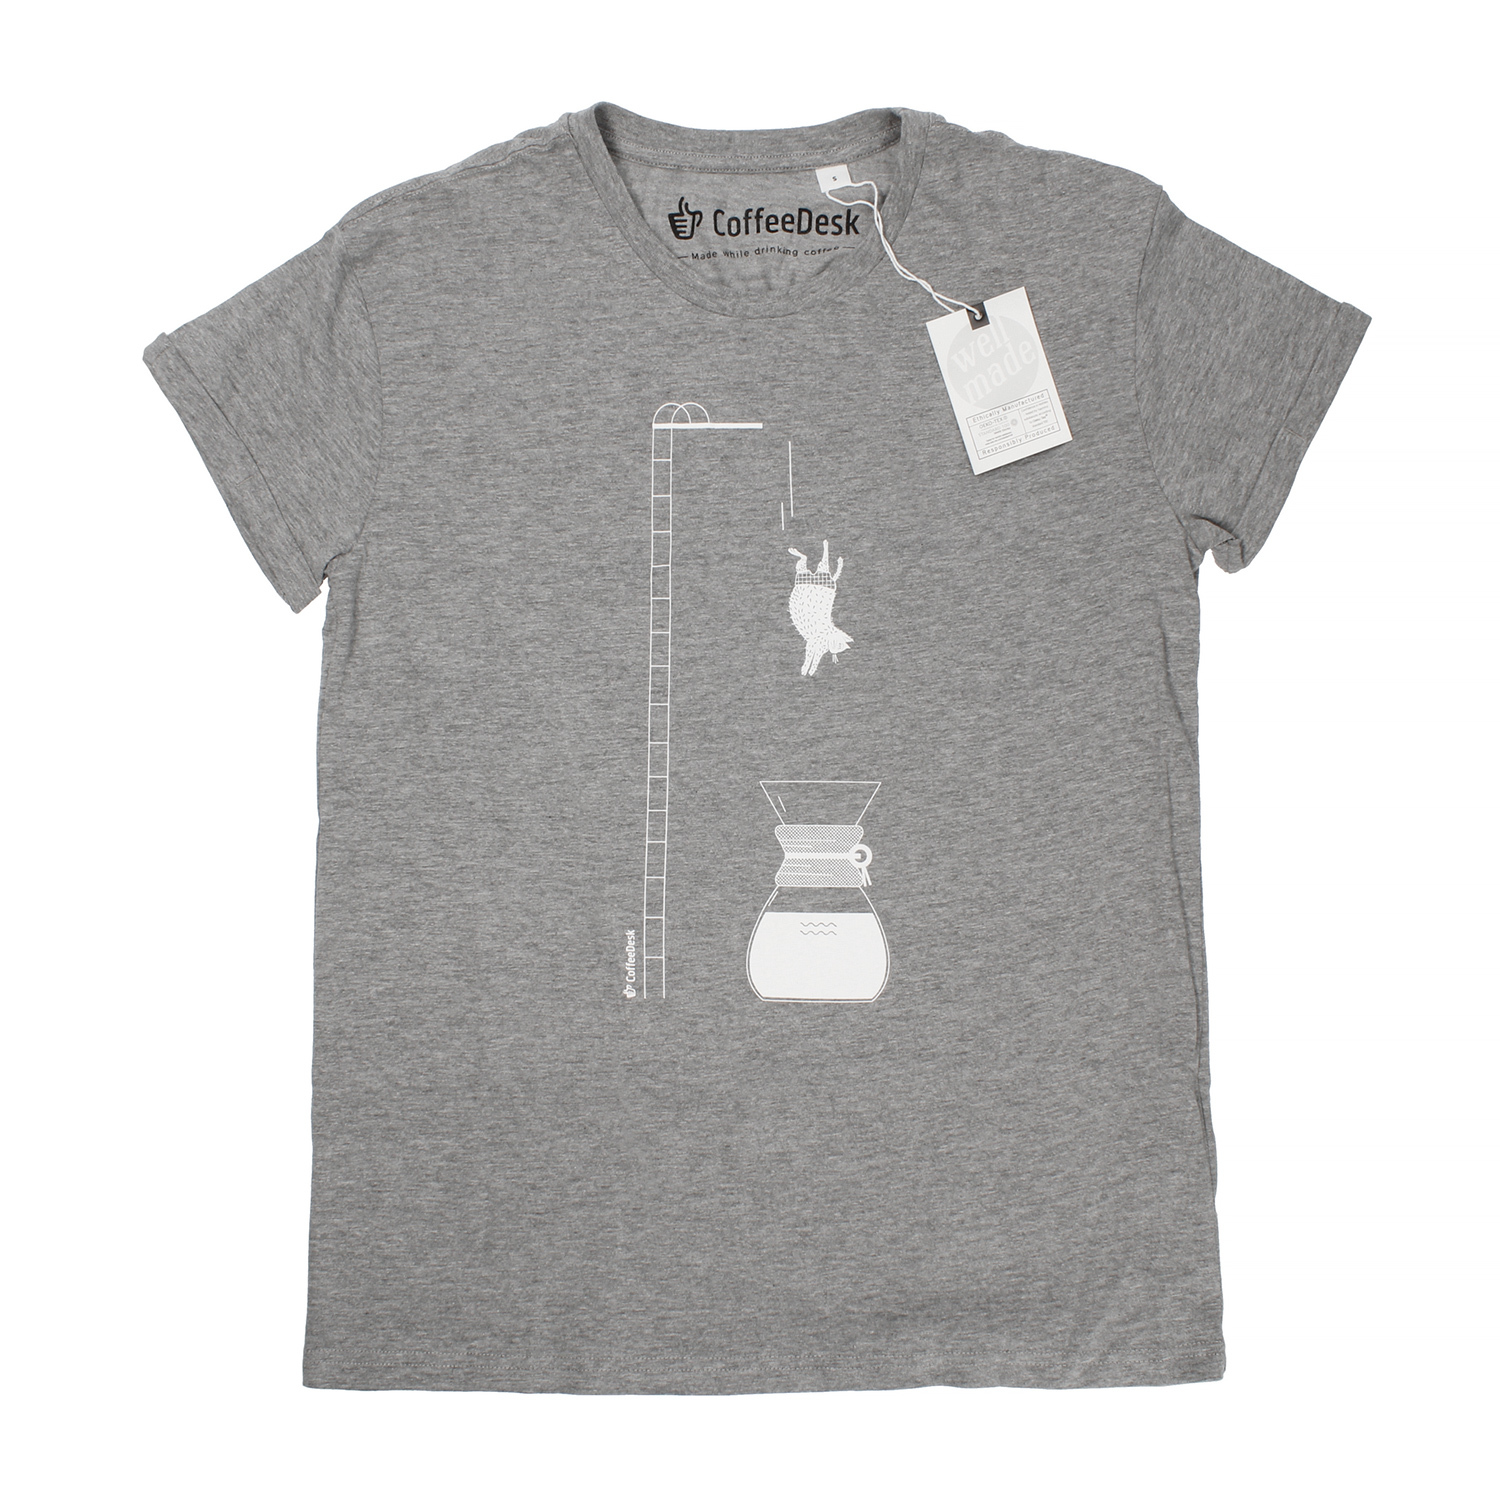 Coffeedesk Chemex Men's Grey T-shirt - XL